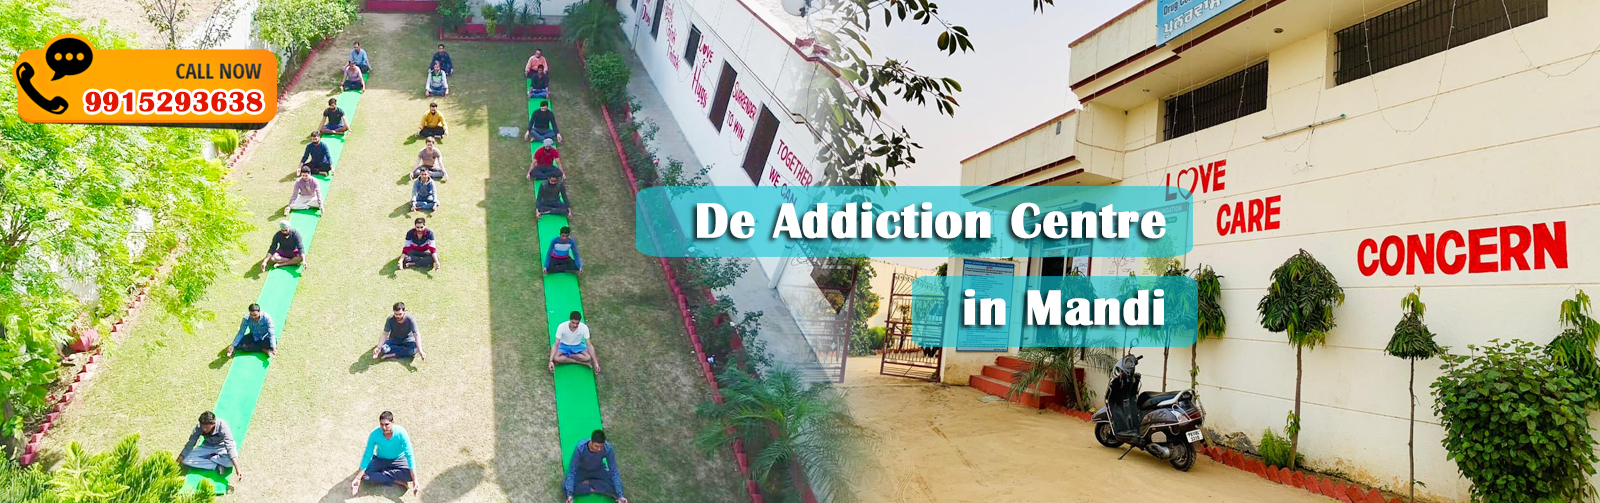 De Addiction Centre in Mandi